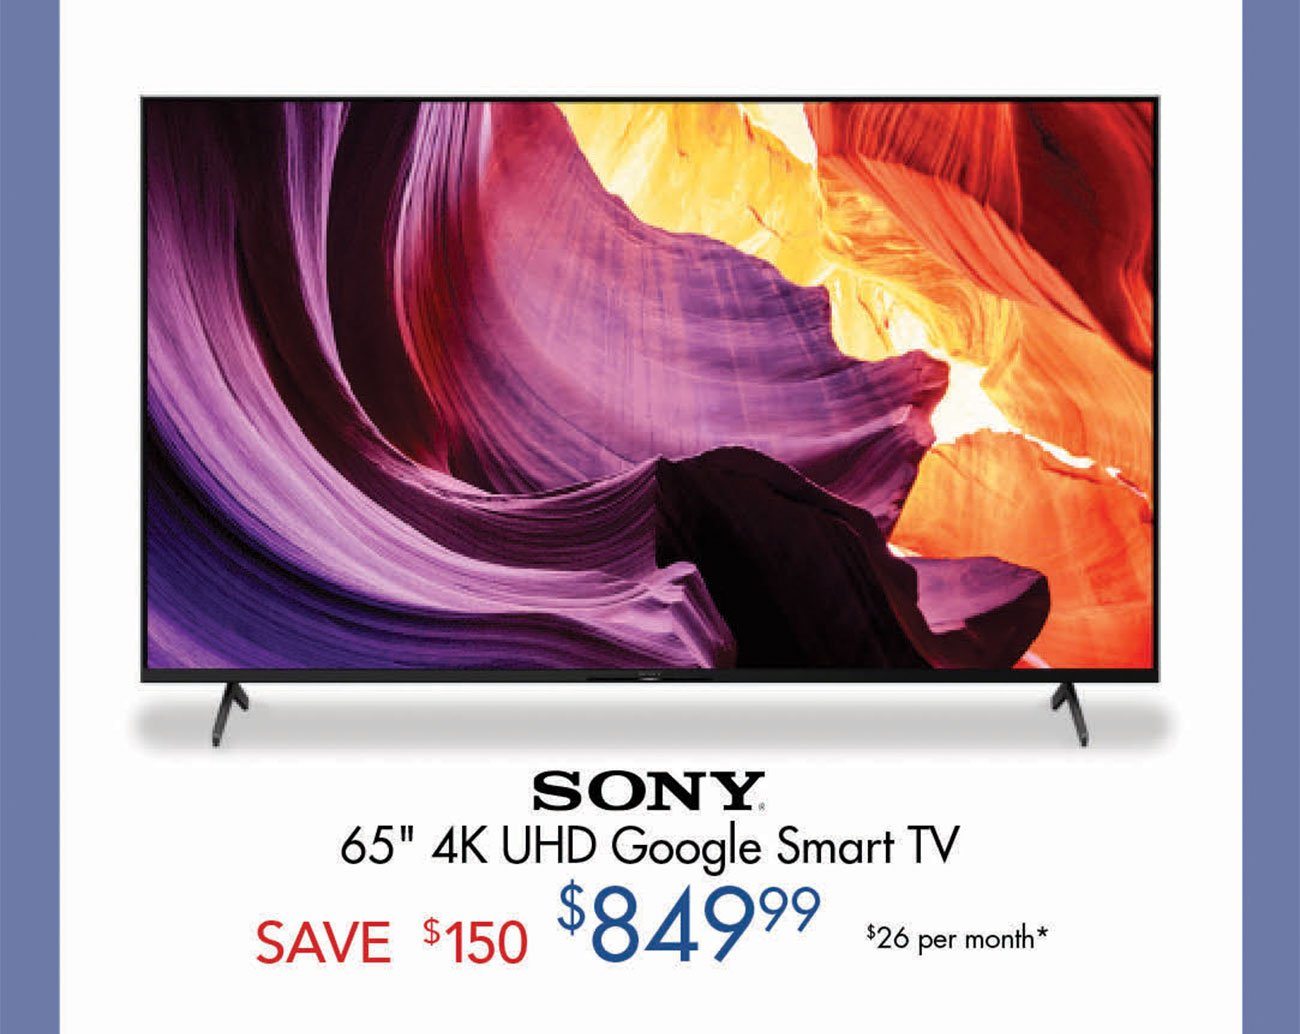 Sony-65-4K-UHD-Google-Smart-TV-UIRV